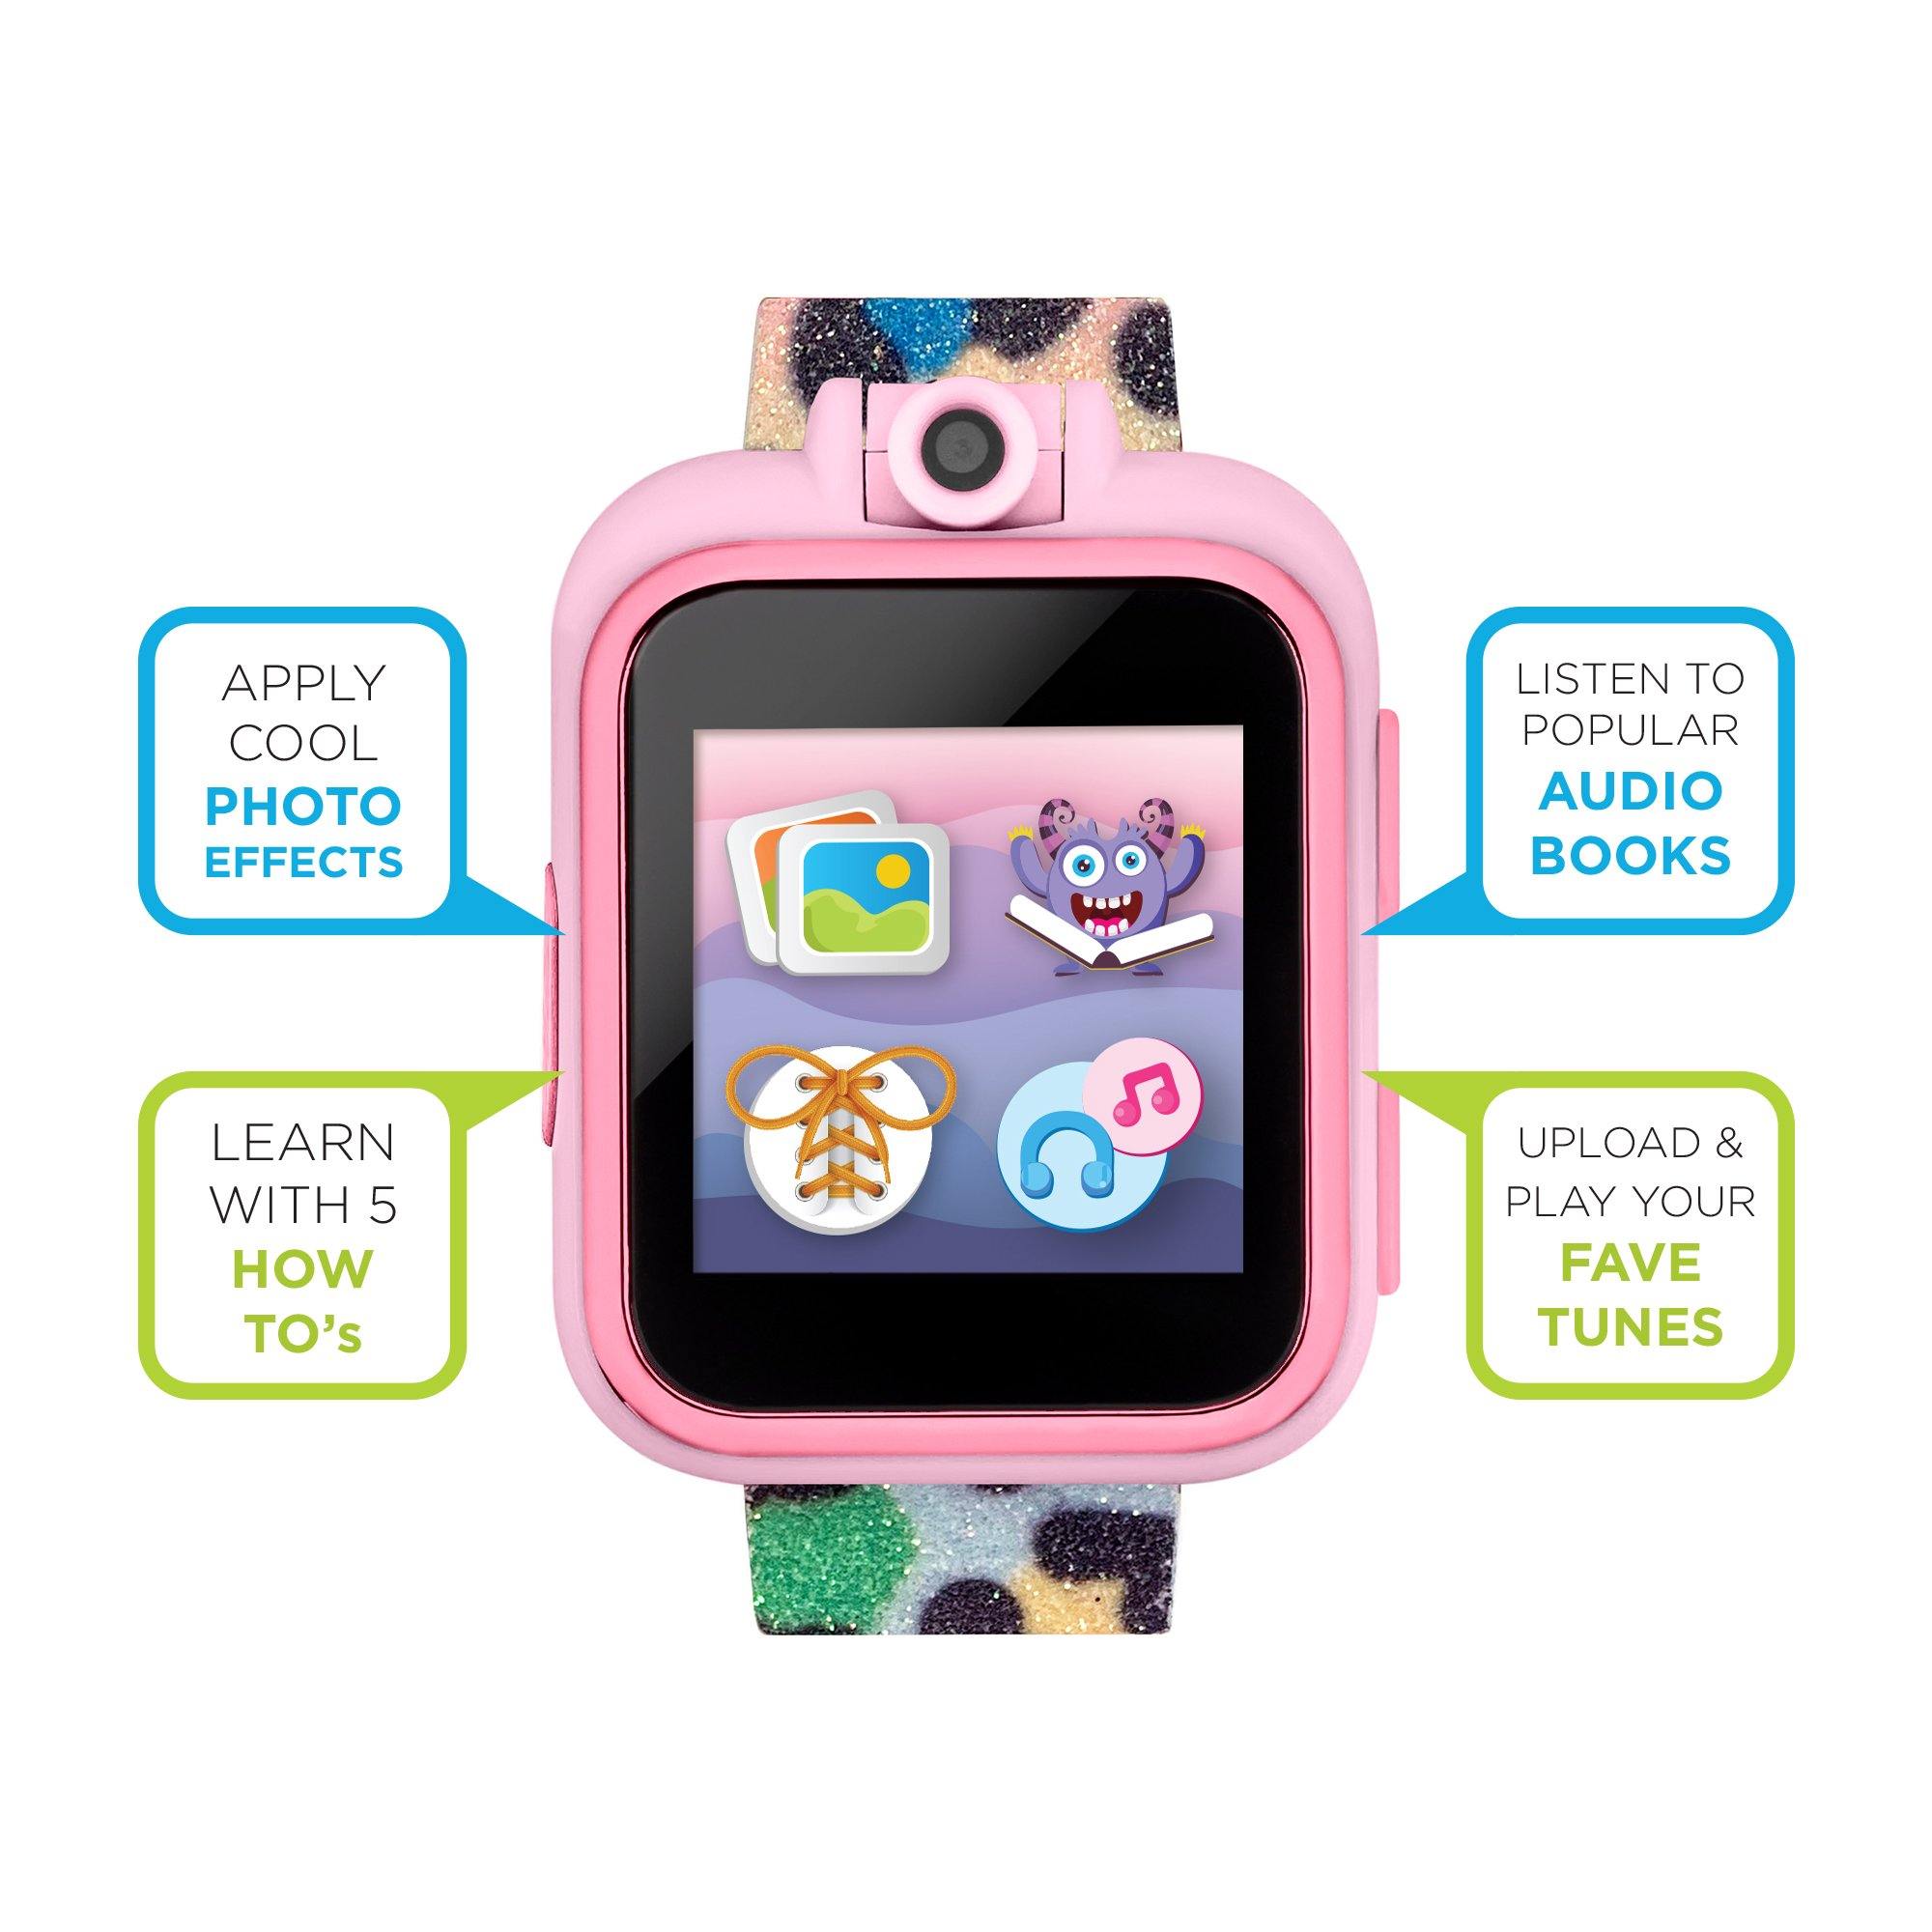 PlayZoom 2 Kids Smartwatch: Rainbow Leopard Print affordable smart watch